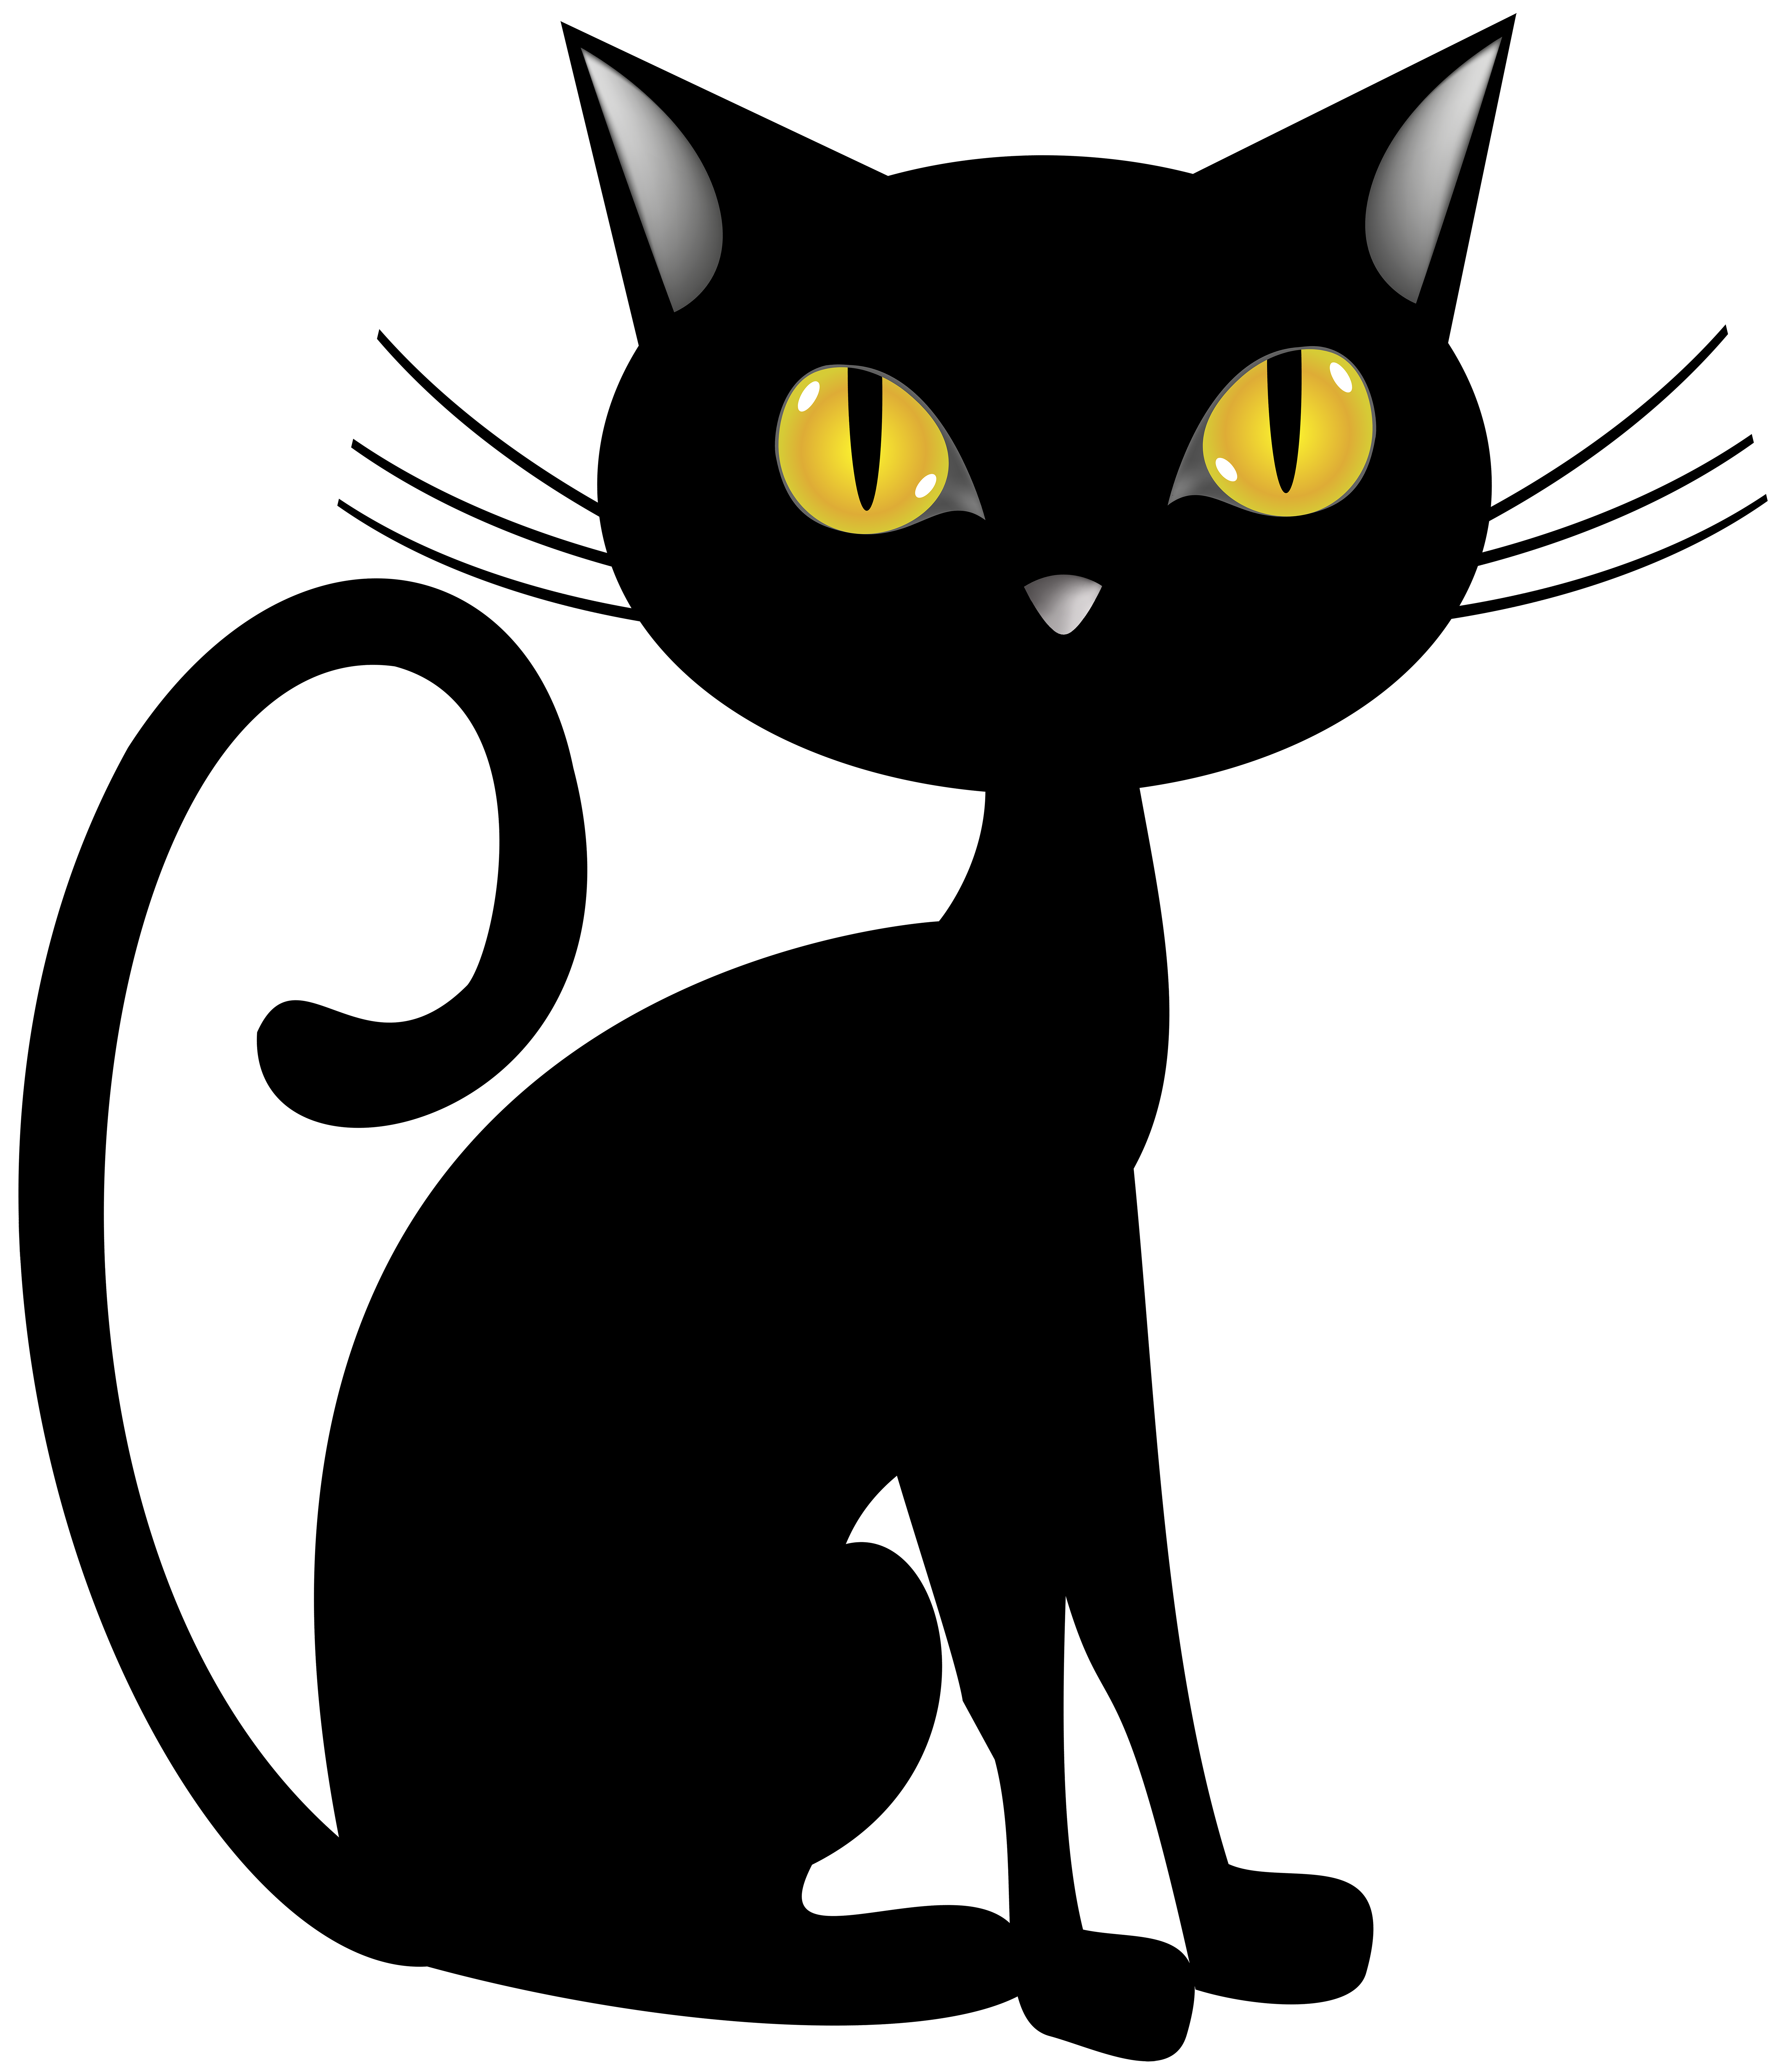 Halloween Black Cat PNG Clip Art Image | Gallery ...